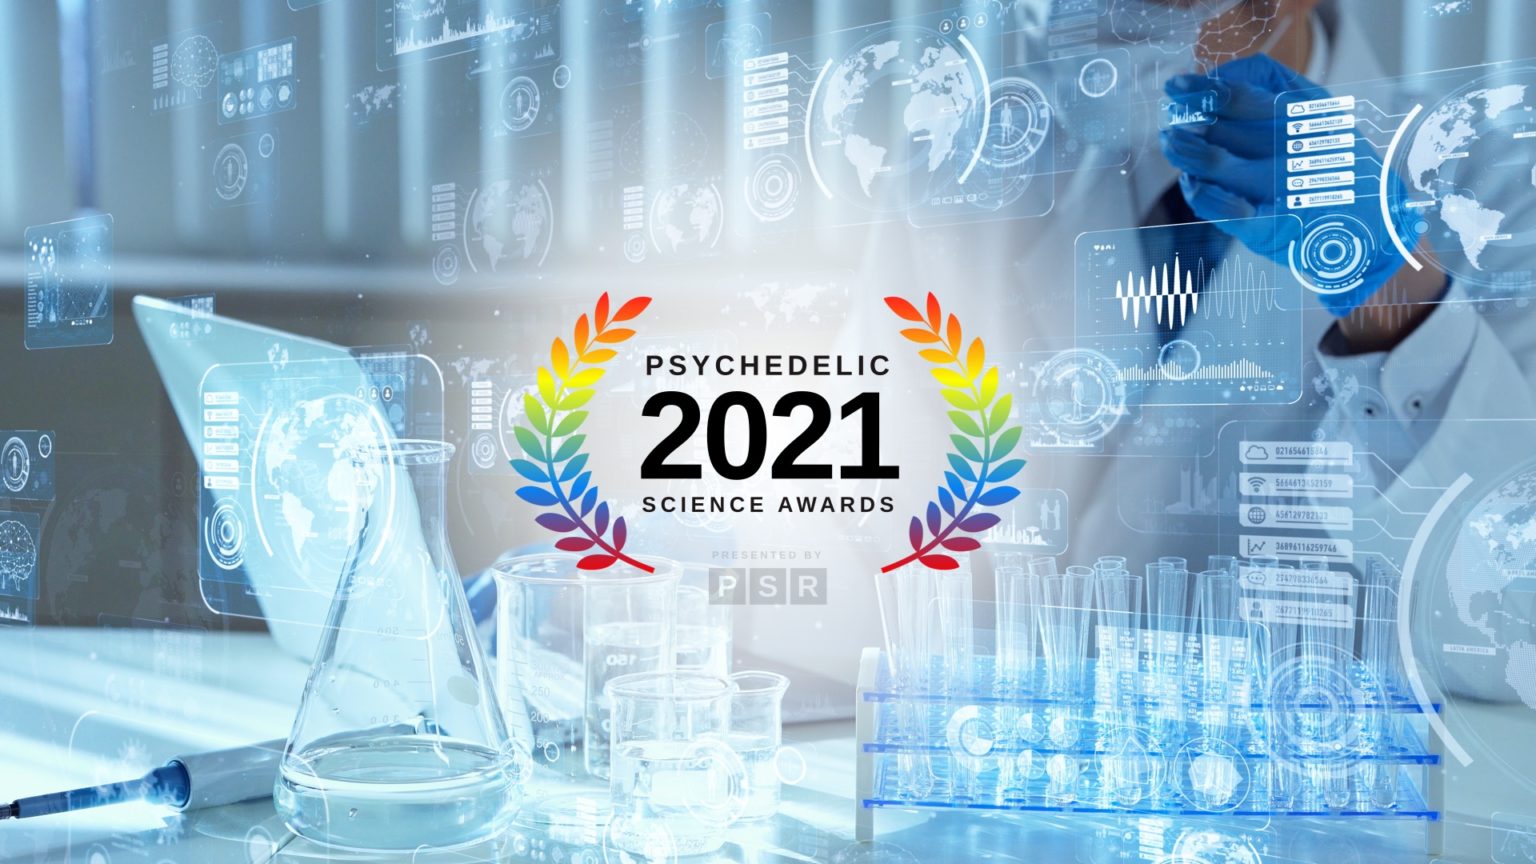 2021-Psychedelic-Science-Awards-2-1536x864.jpg